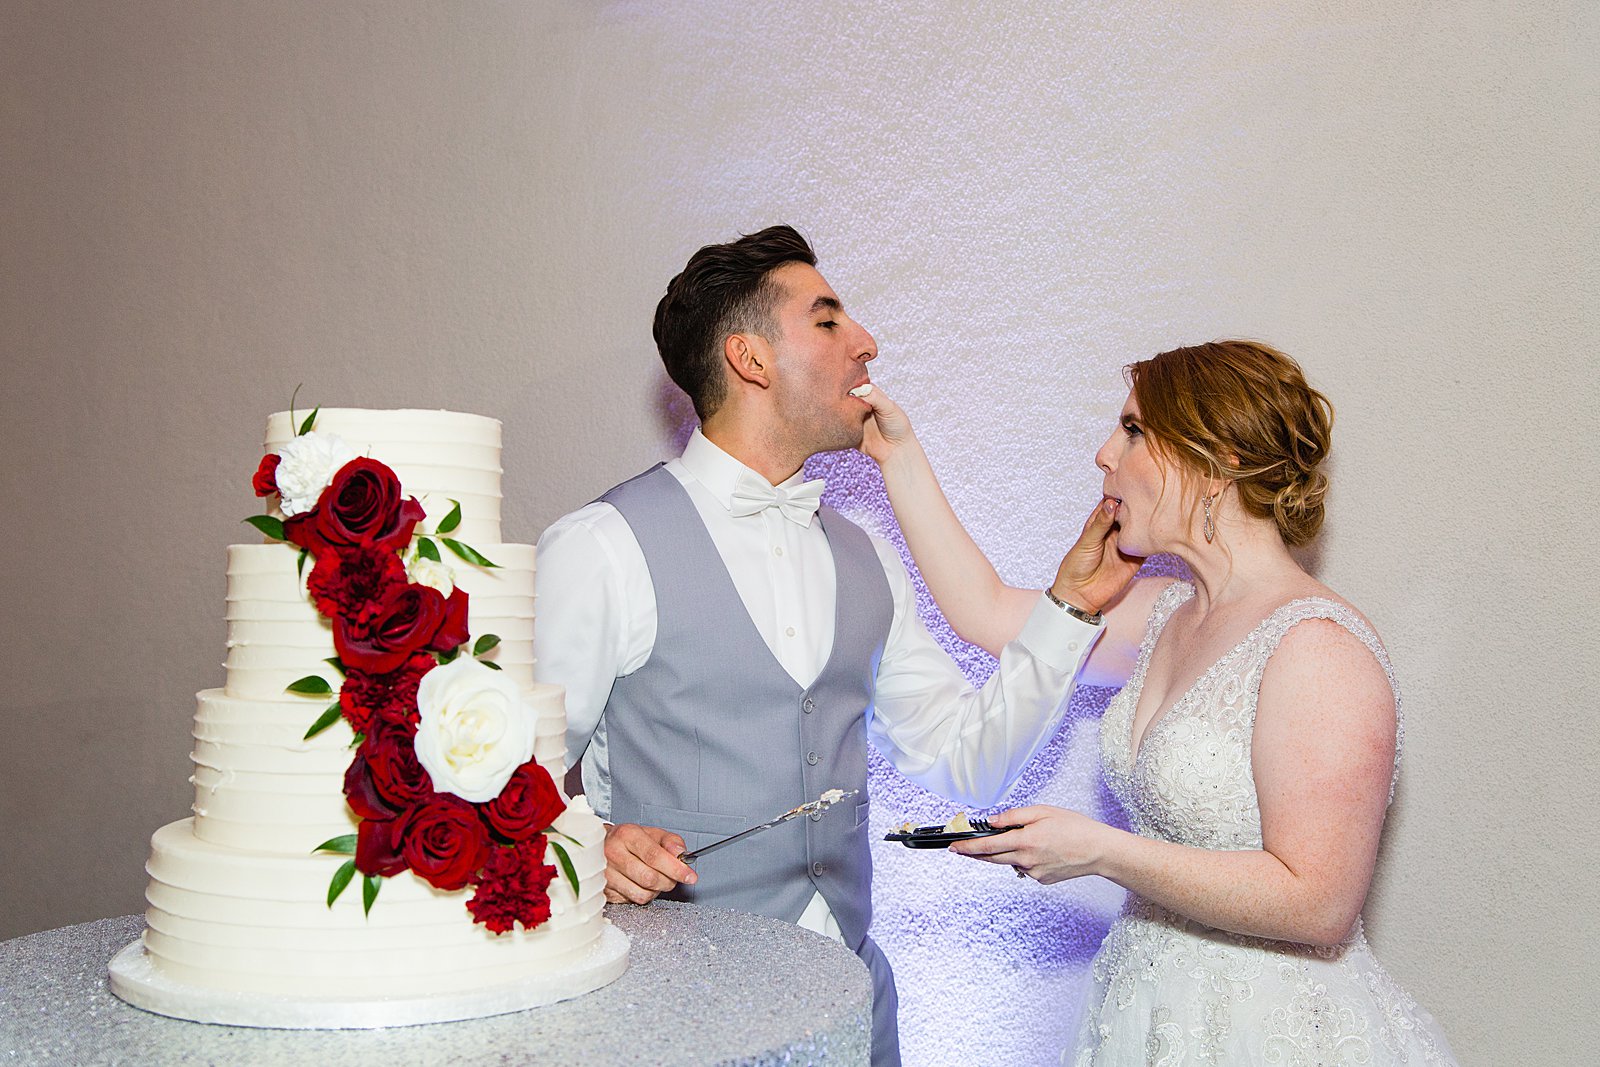 Bride and Groom cutting their wedding cake at their SoHo63 wedding reception by Arizona wedding photographer PMA Photography.